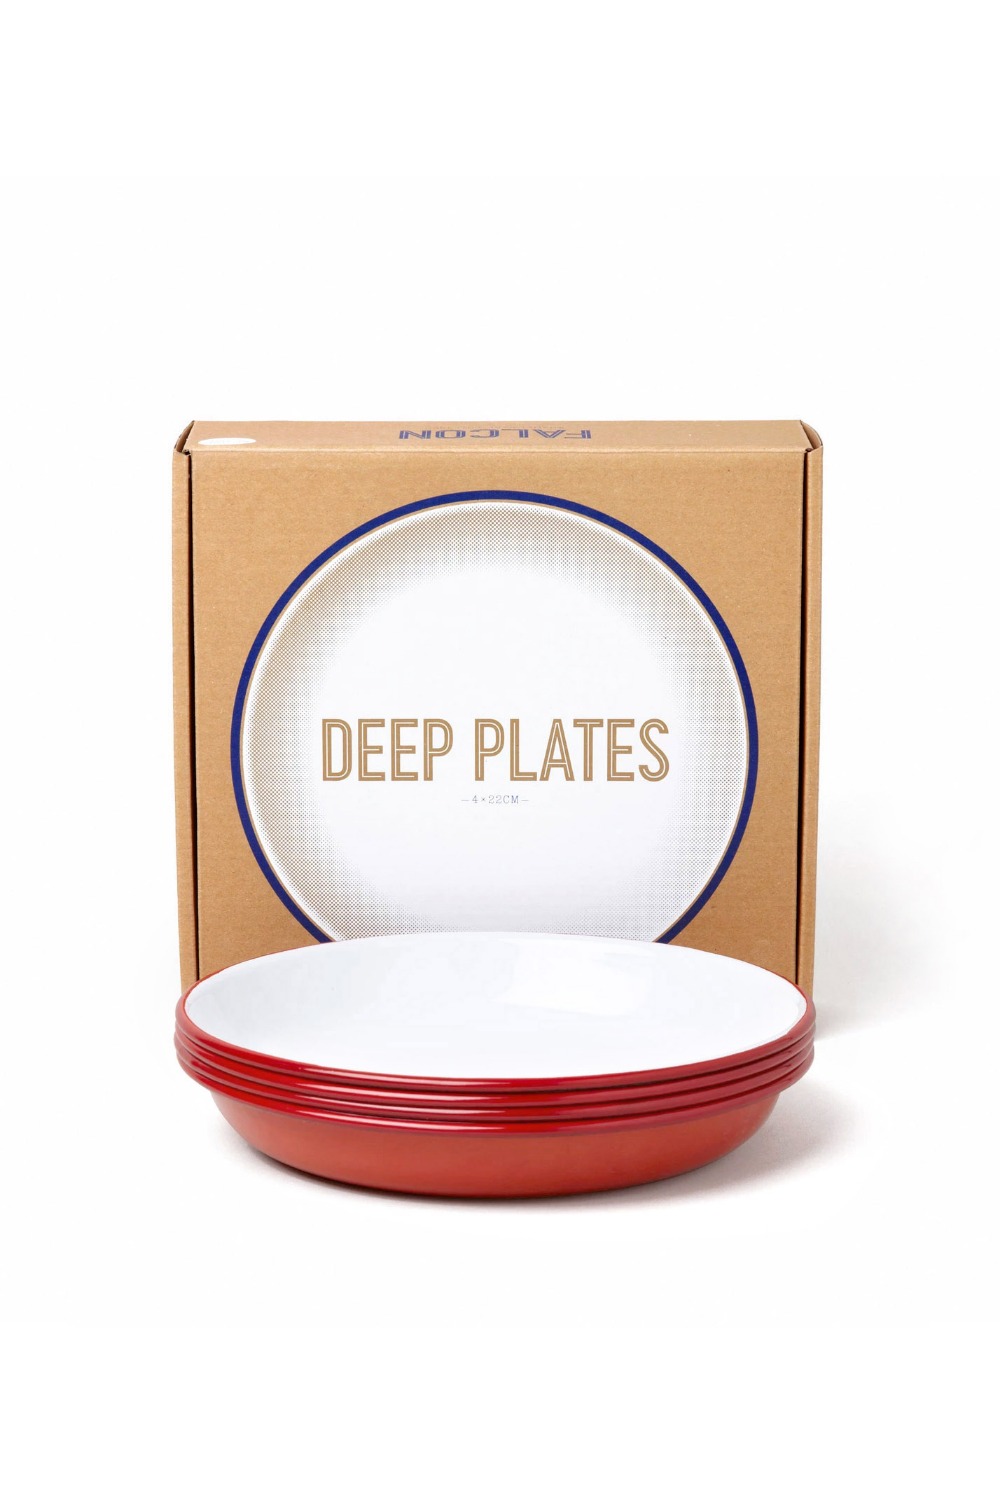 FALCON(팔콘) Deep Plates - red